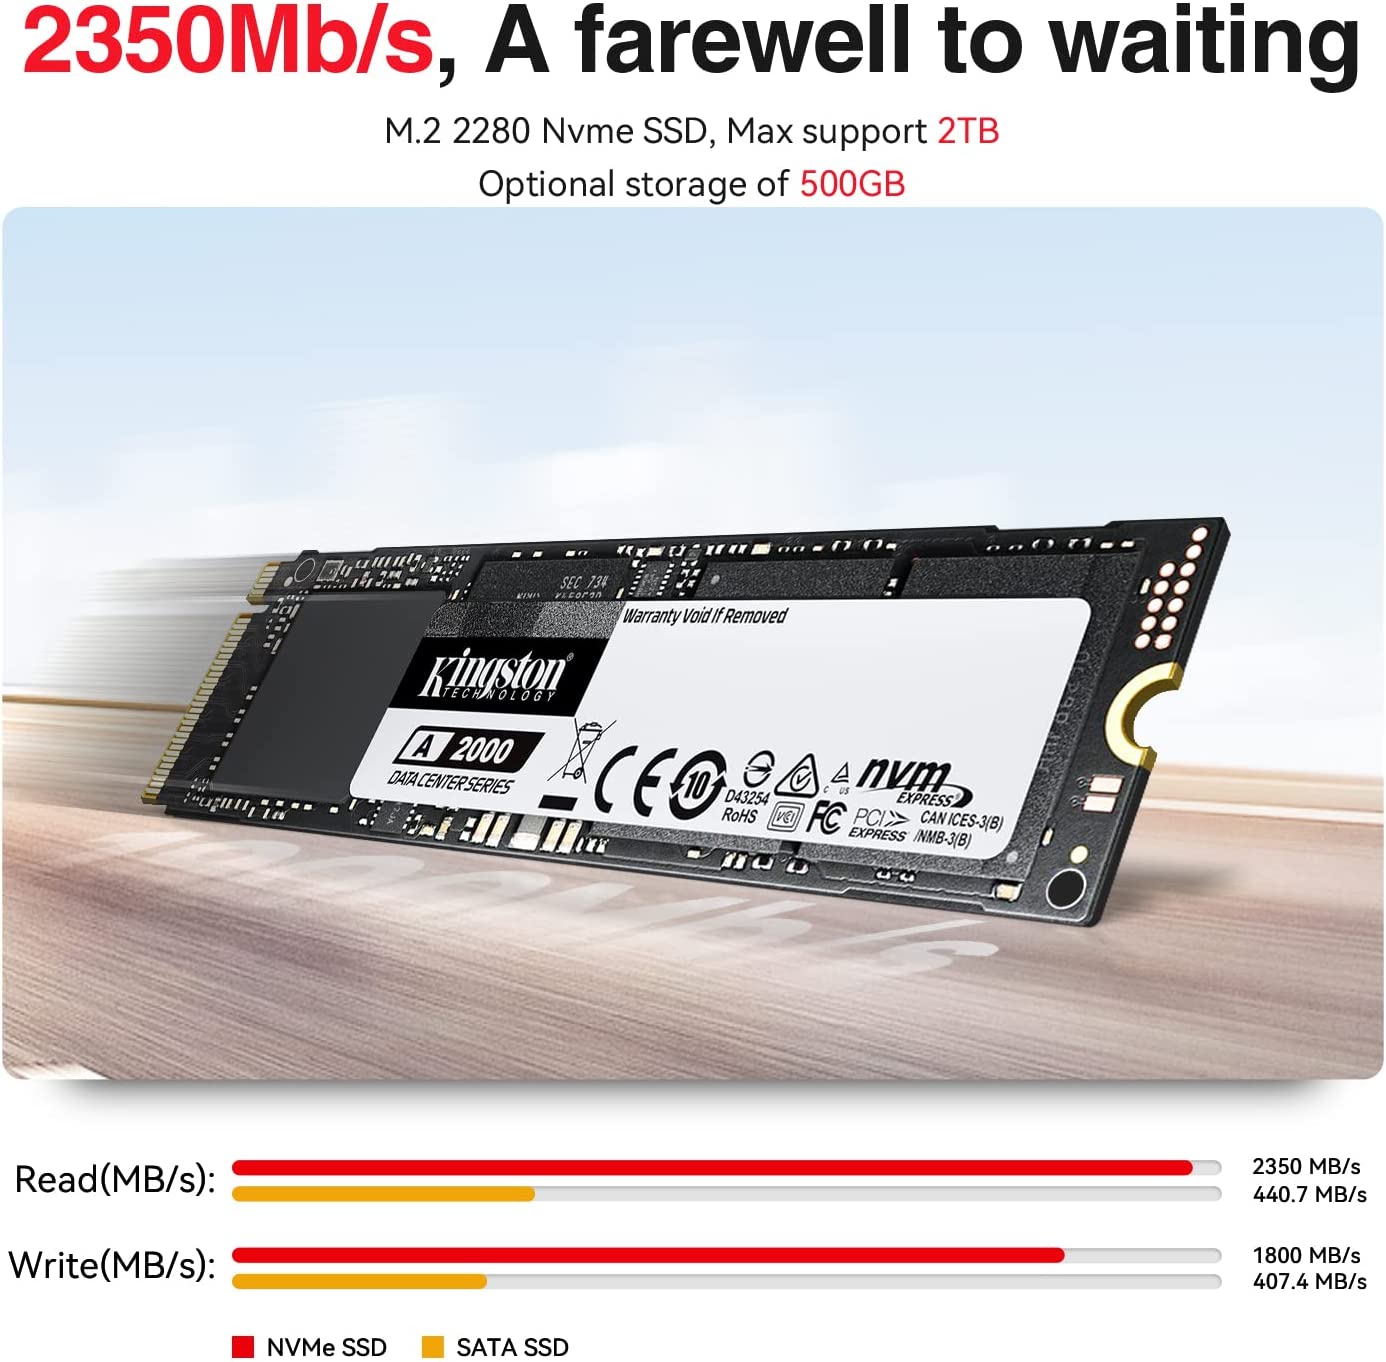 TRIGKEY Mini PC AMD Ryzen 5 5500 16G DDR4 500G NVME SSD